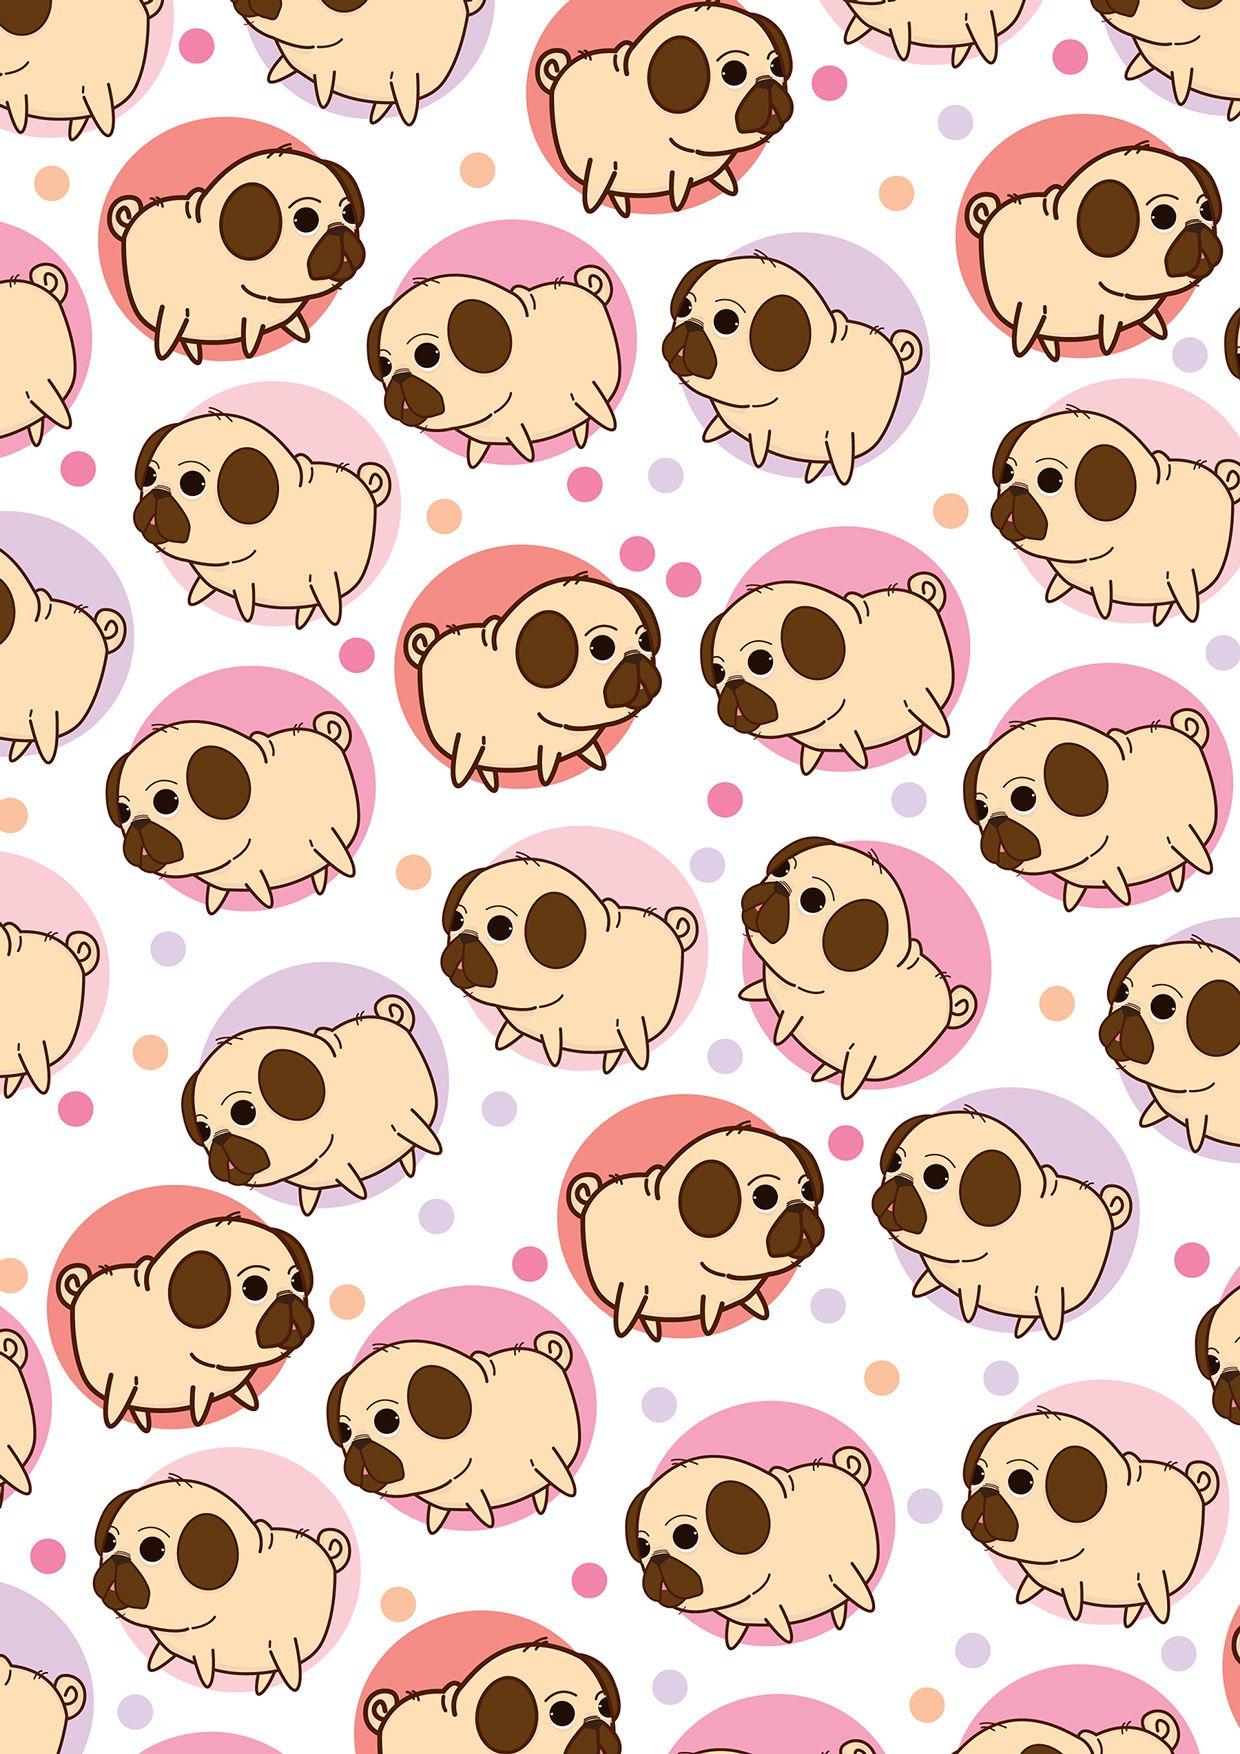 Pugs in a pattern. pugs.pugs.pugs.. Patterns